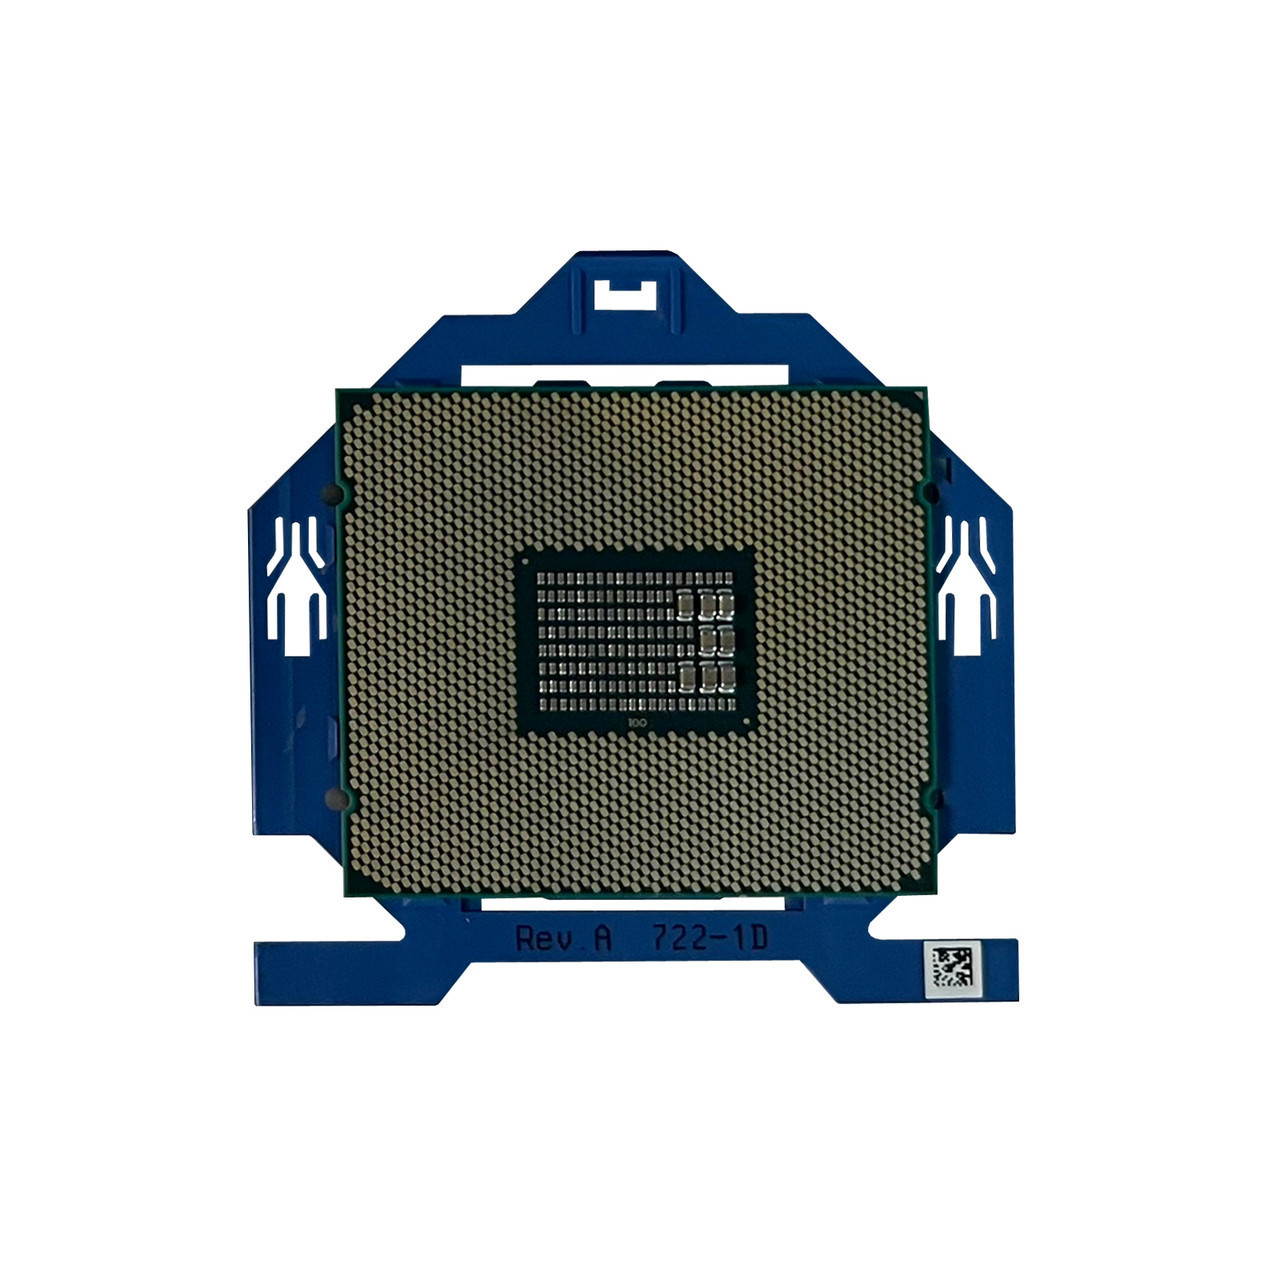 HP 826110-L21 ML110 Gen9 Xeon E5-1660 V4 8C 3.2Ghz Processor